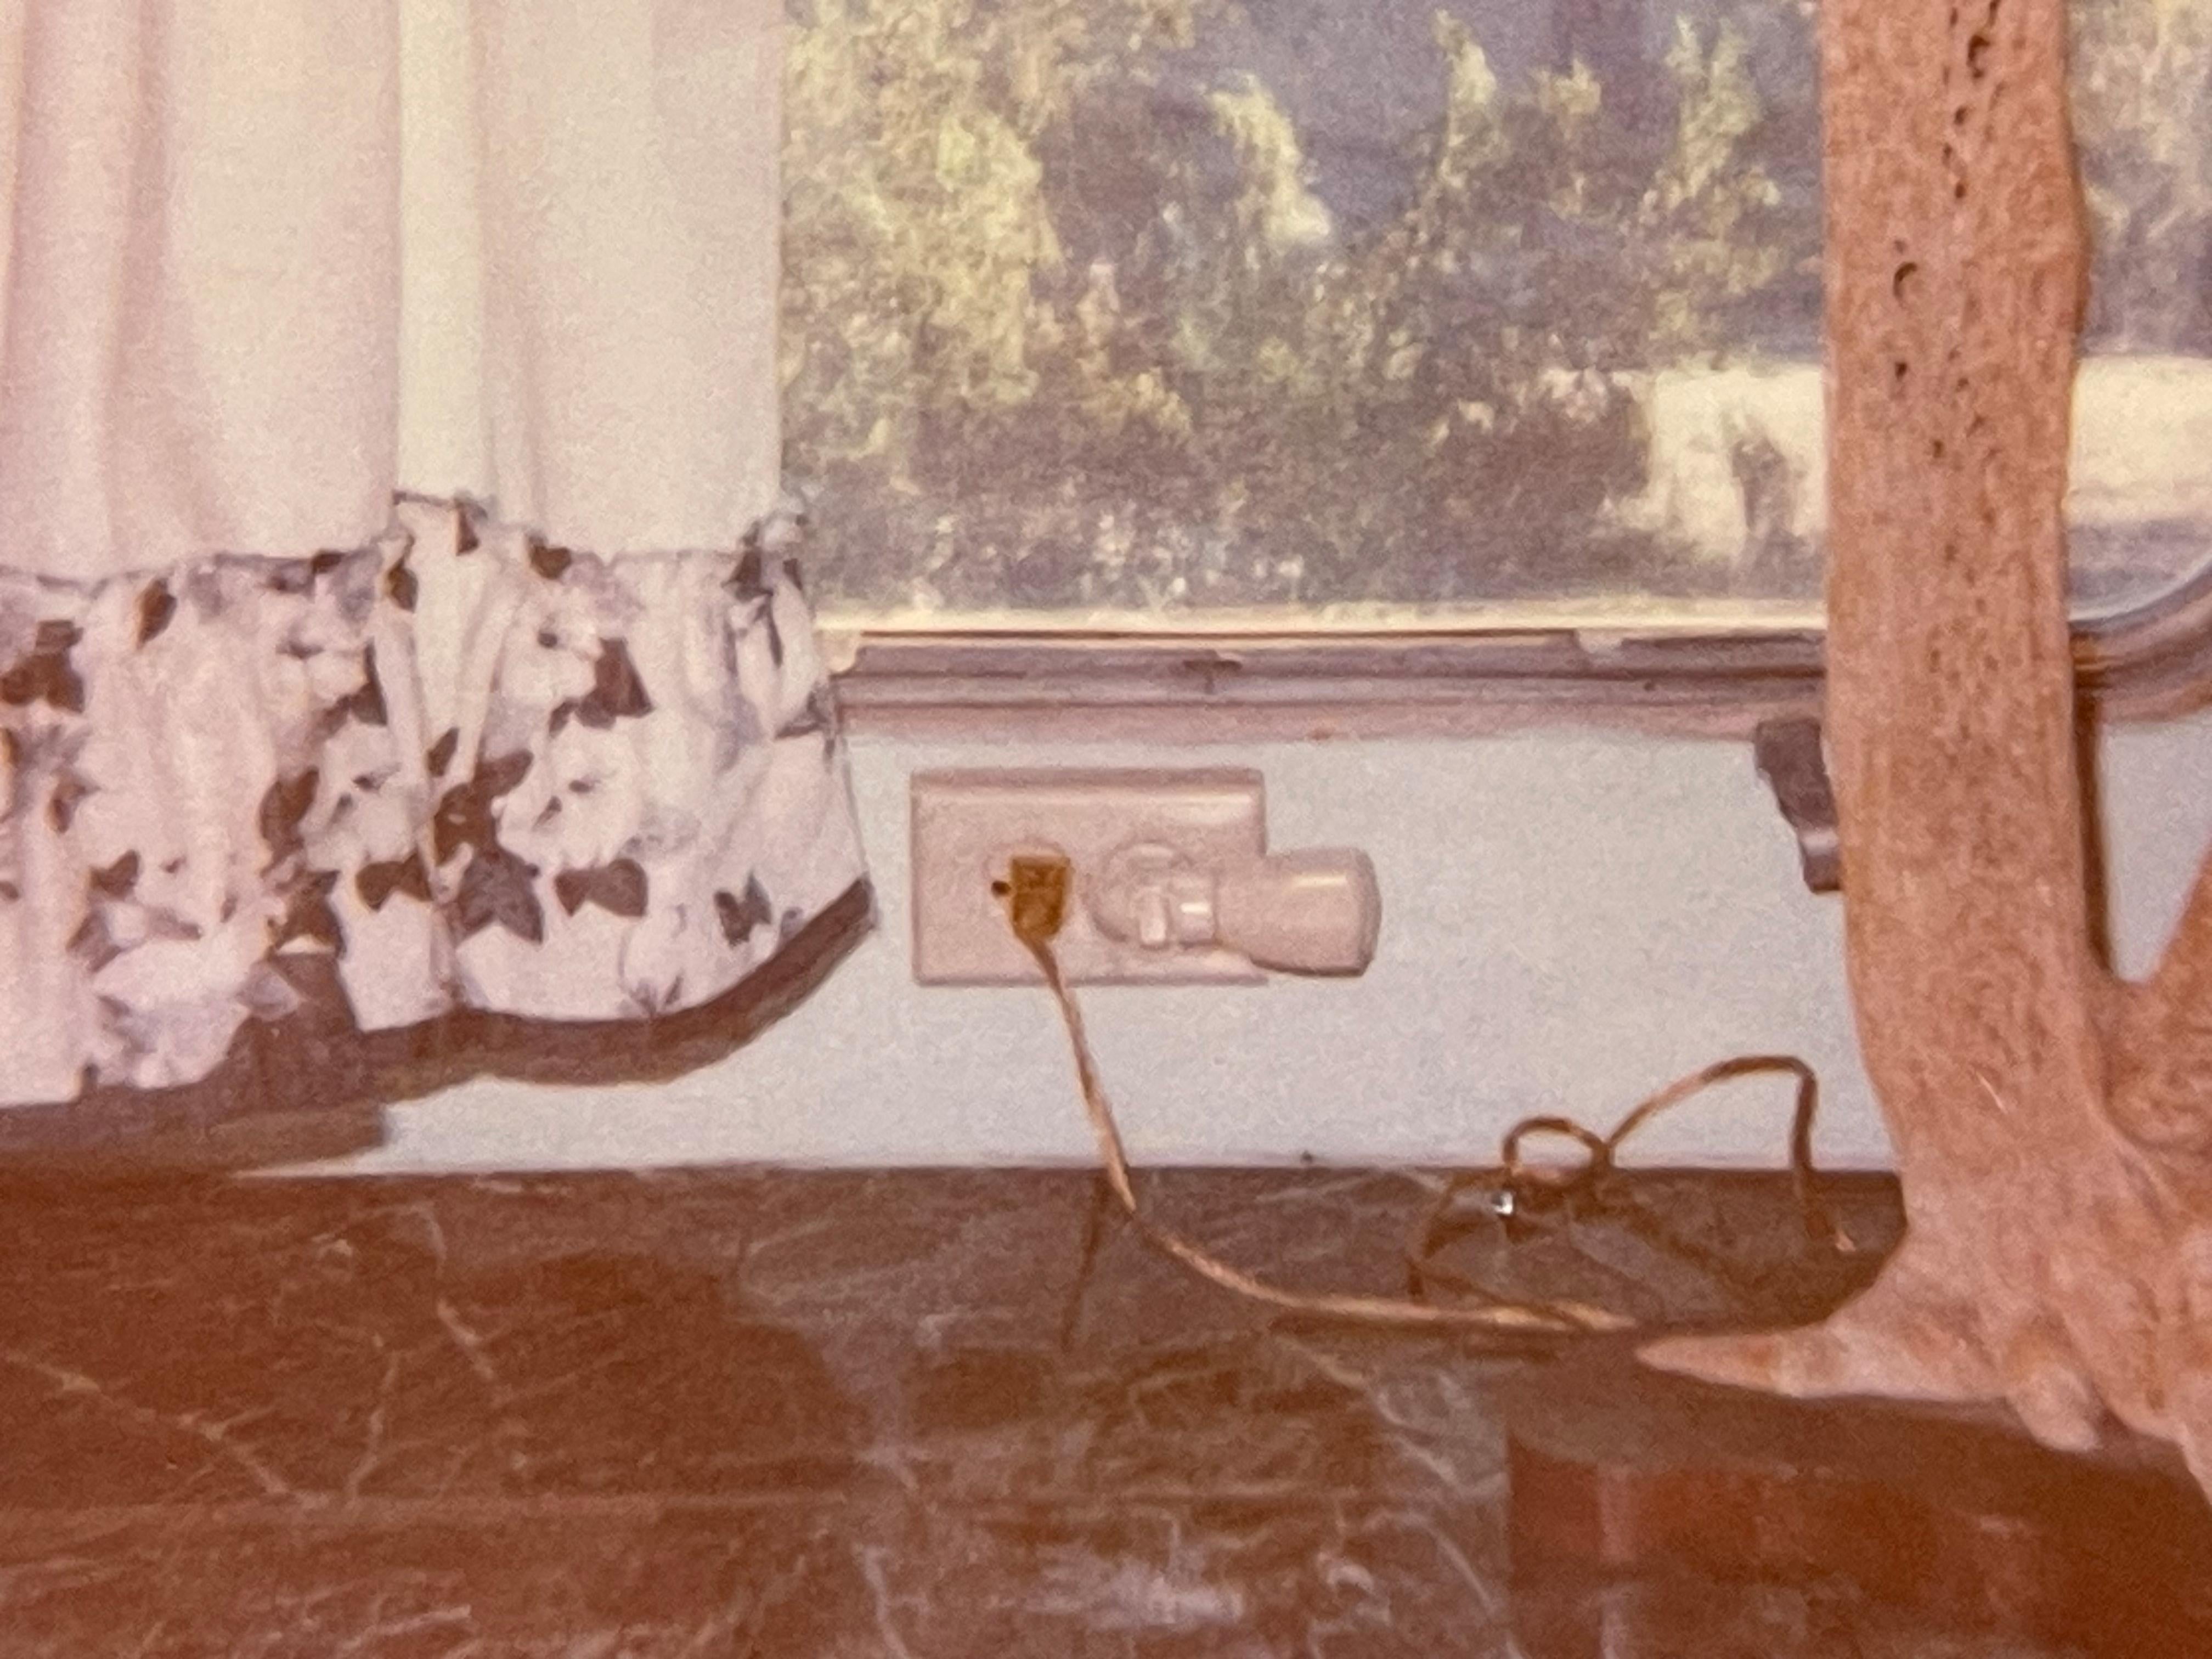 La lampe (Sidewinder) - Pièce unique d'origine Polaroid en vente 1